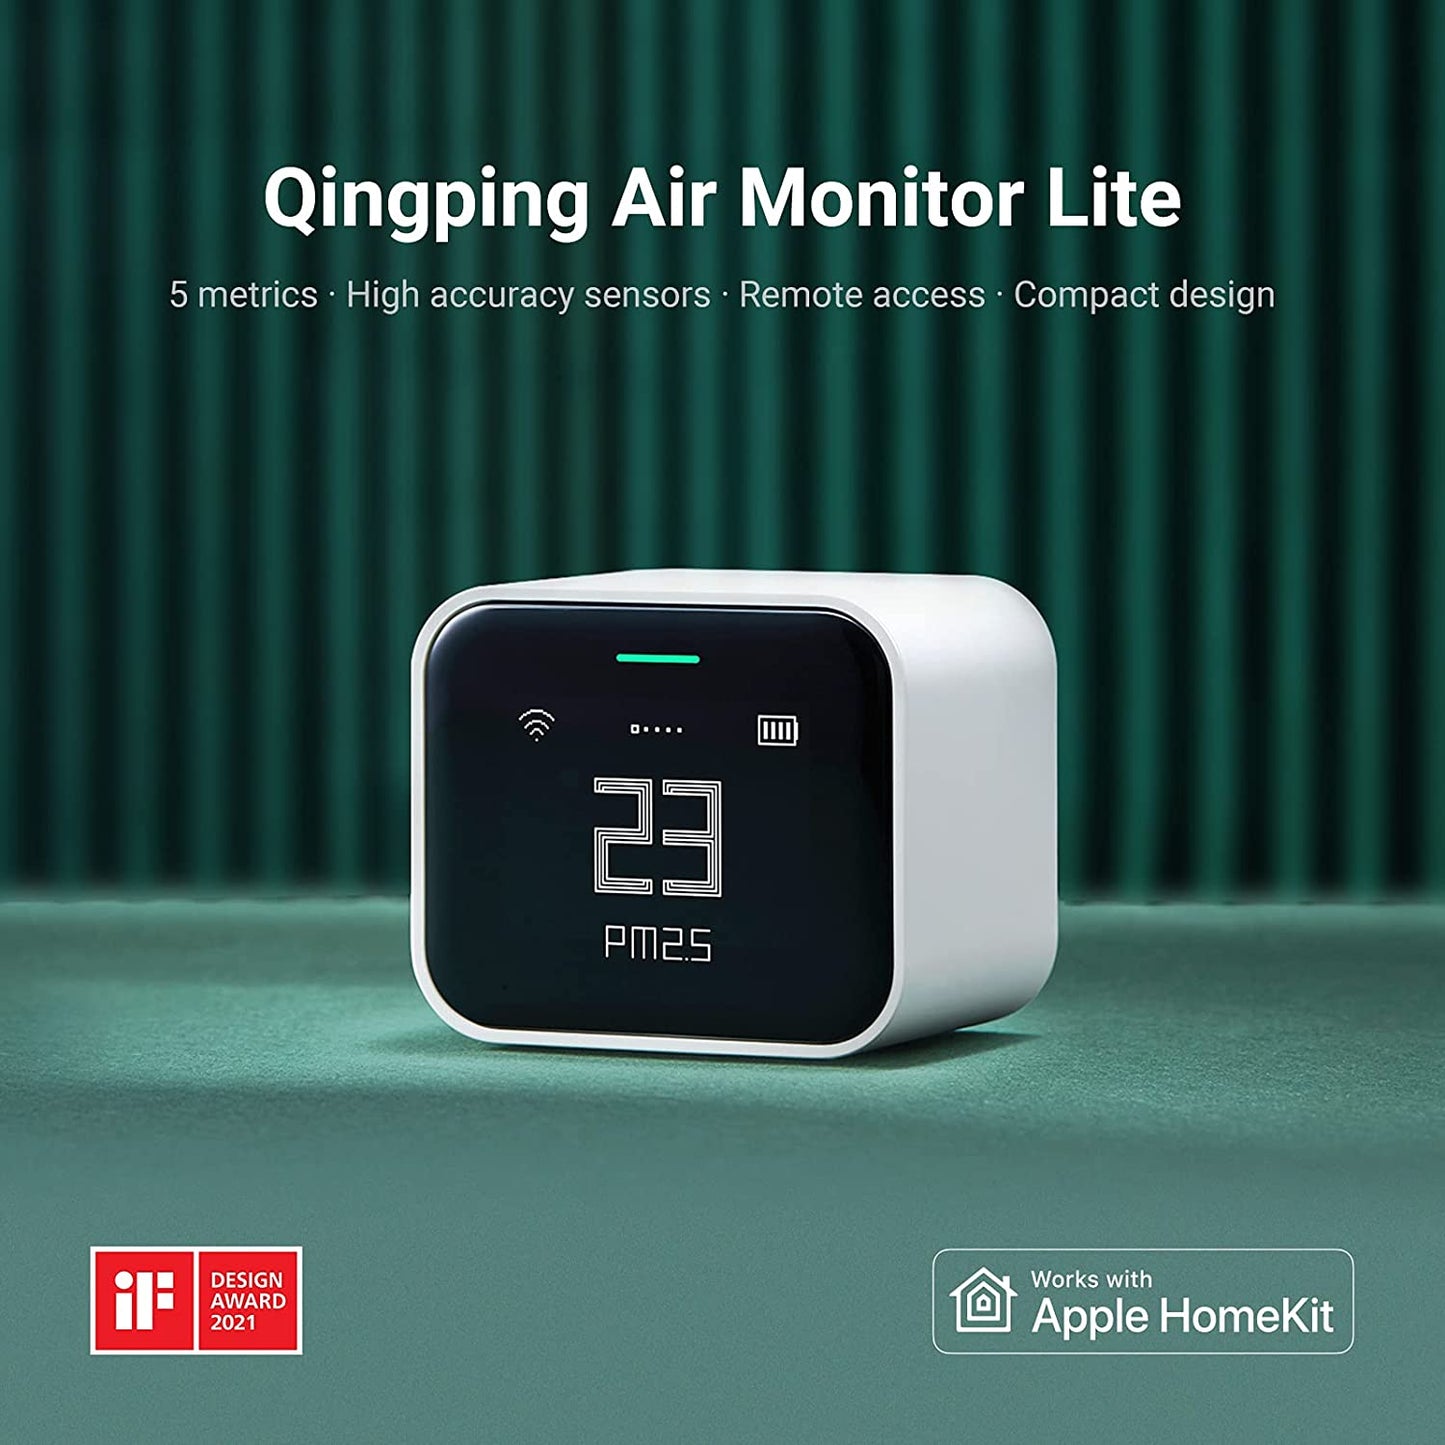 Qingping Air Monitor Lite